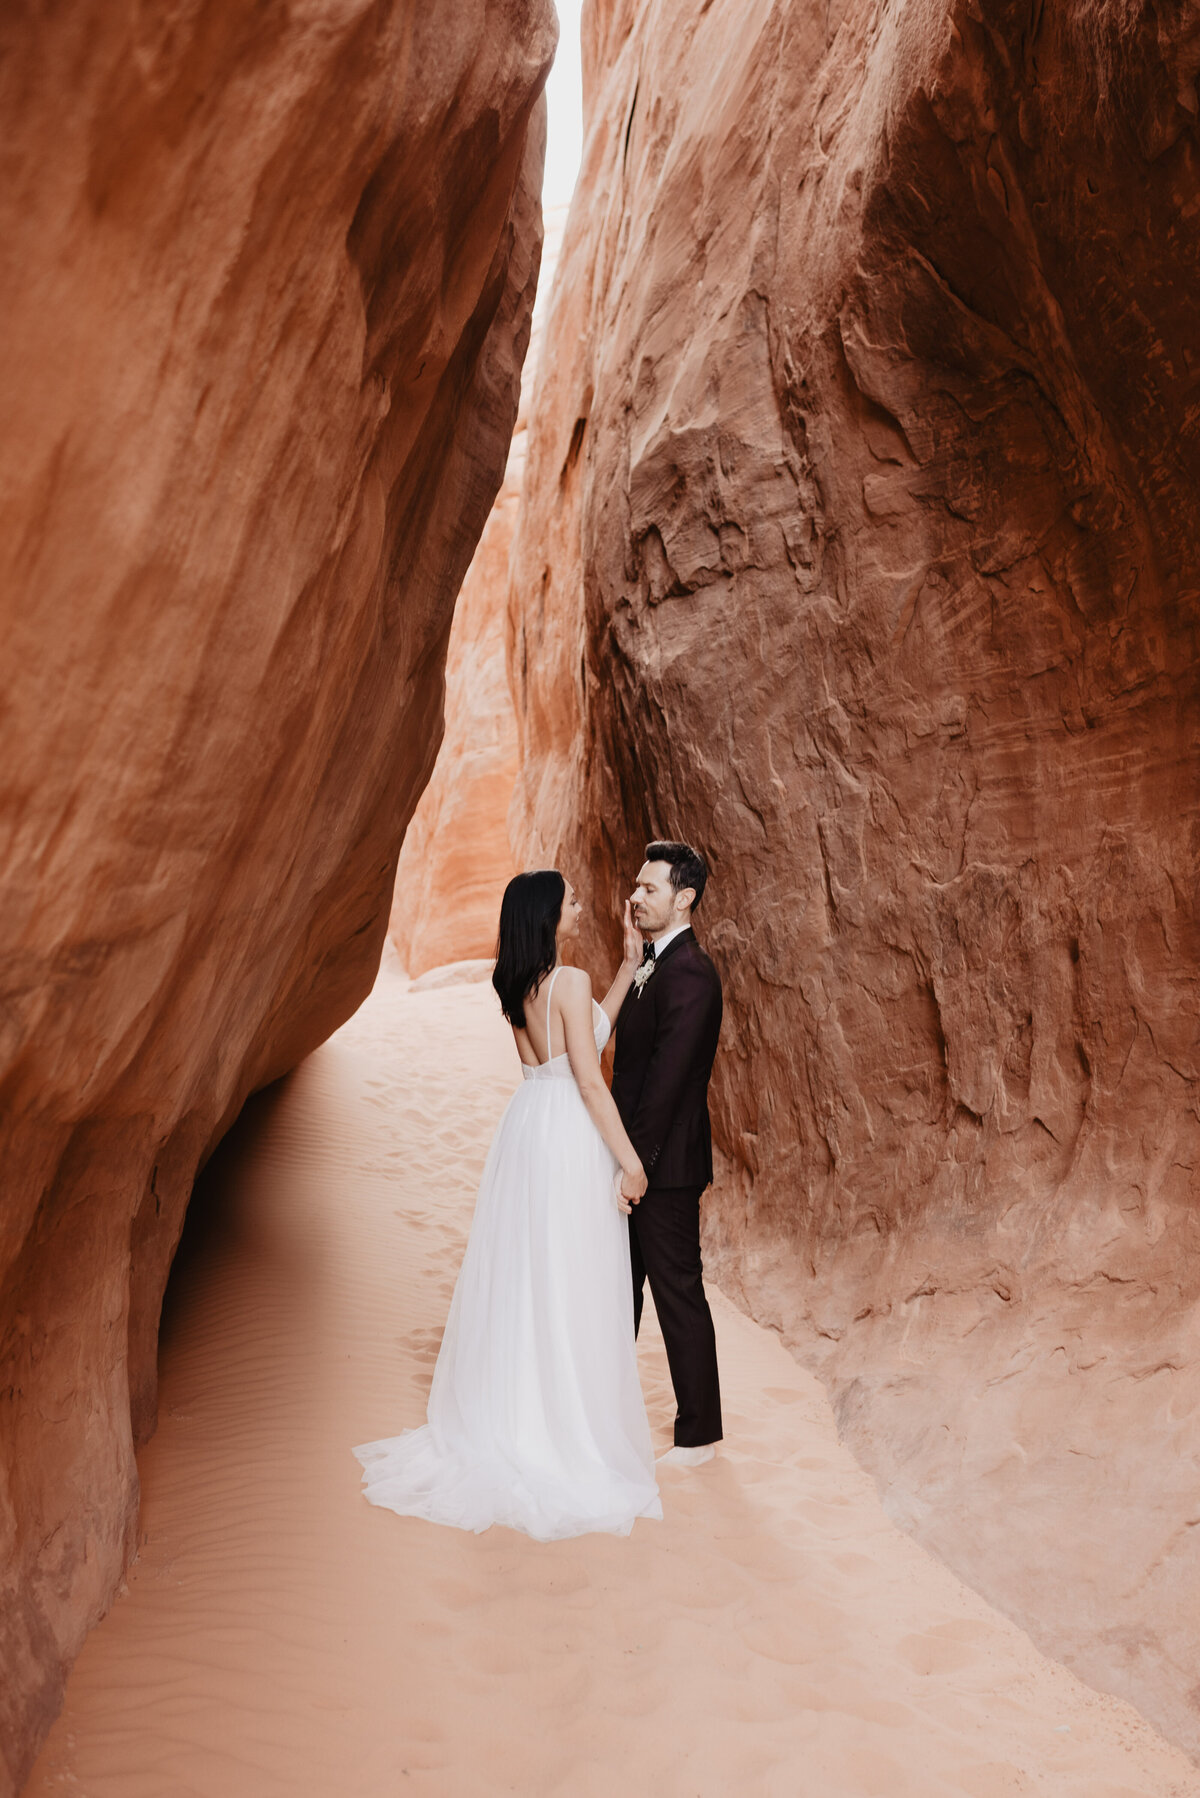 Utah elopement photographer captures bride touching groom's face